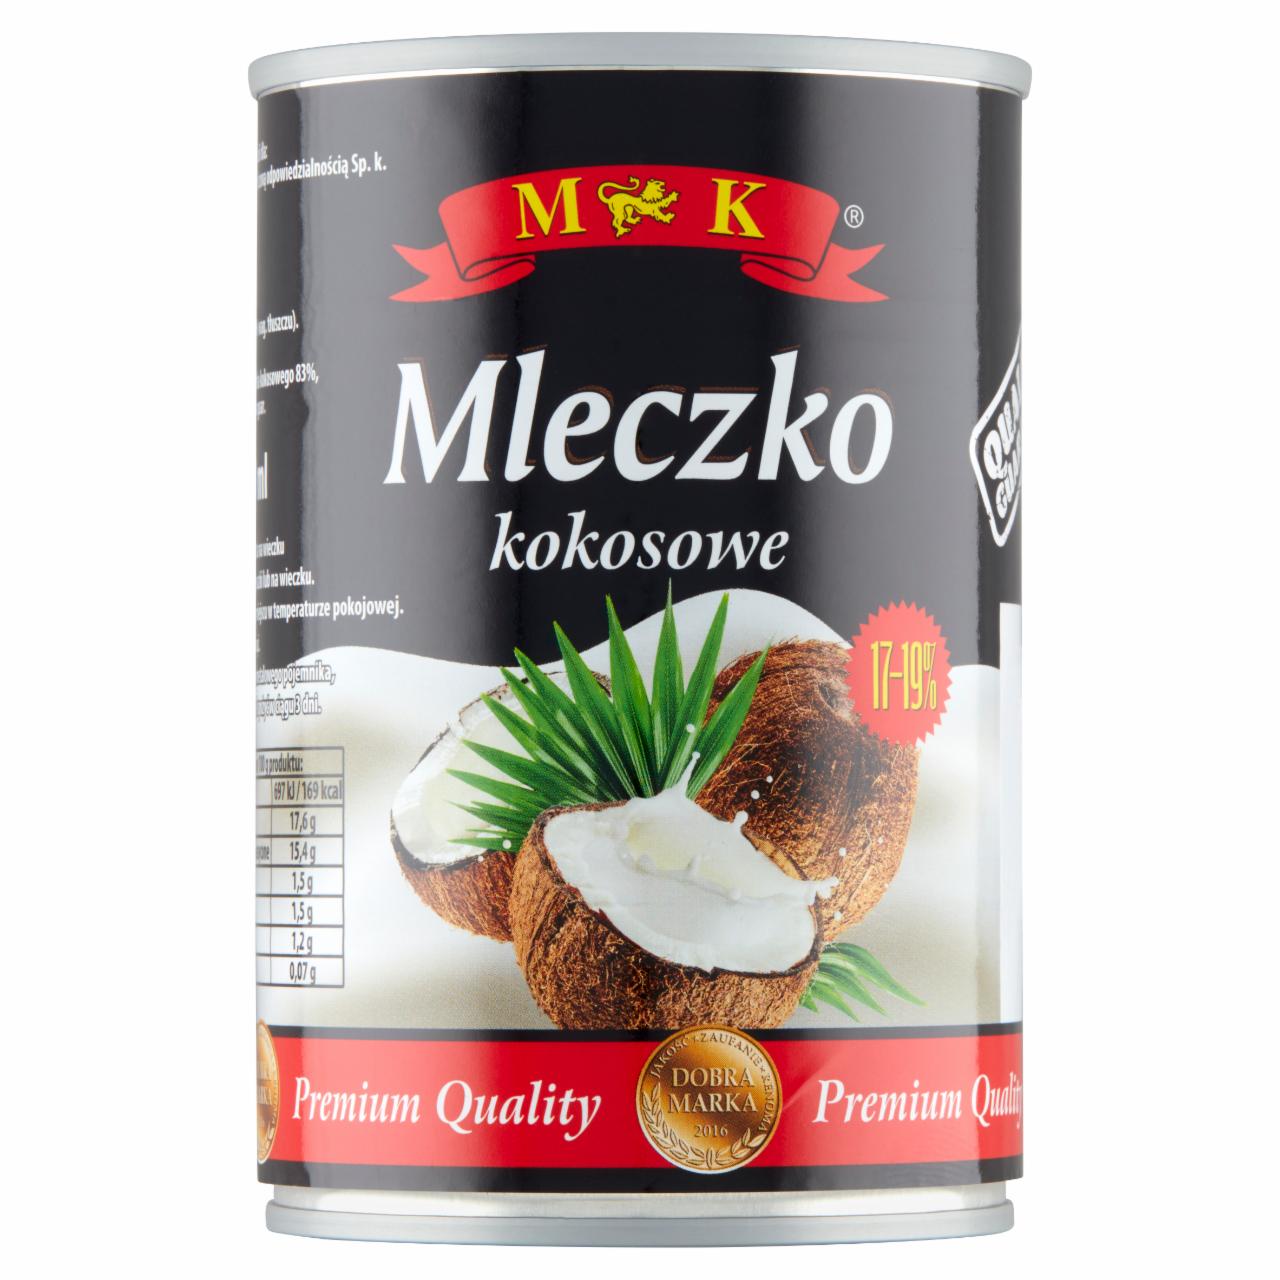 Фото - Молоко кокосовое Mleczko Kokosowe M&K